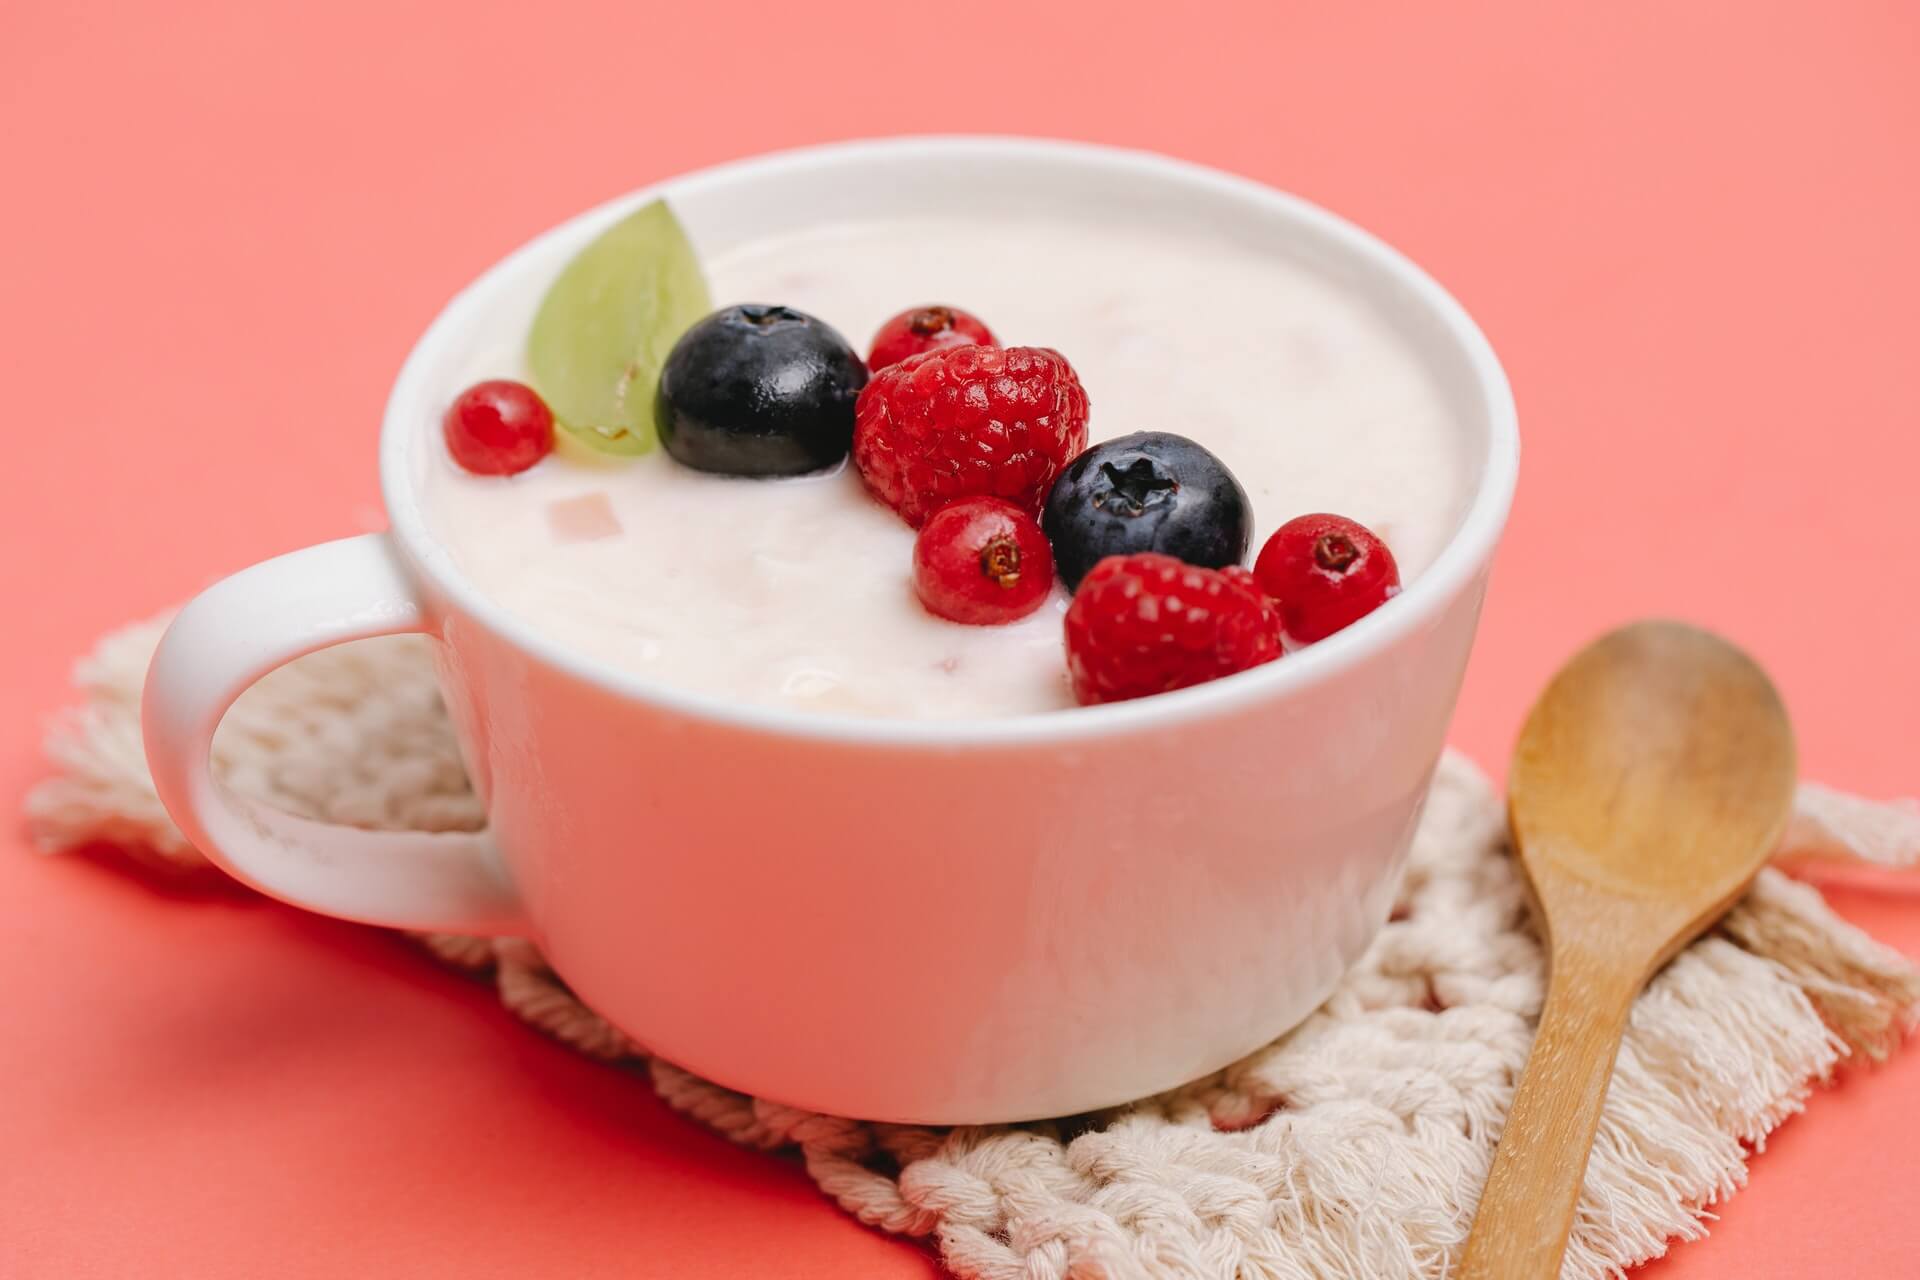 Yogurt with fruit toppings